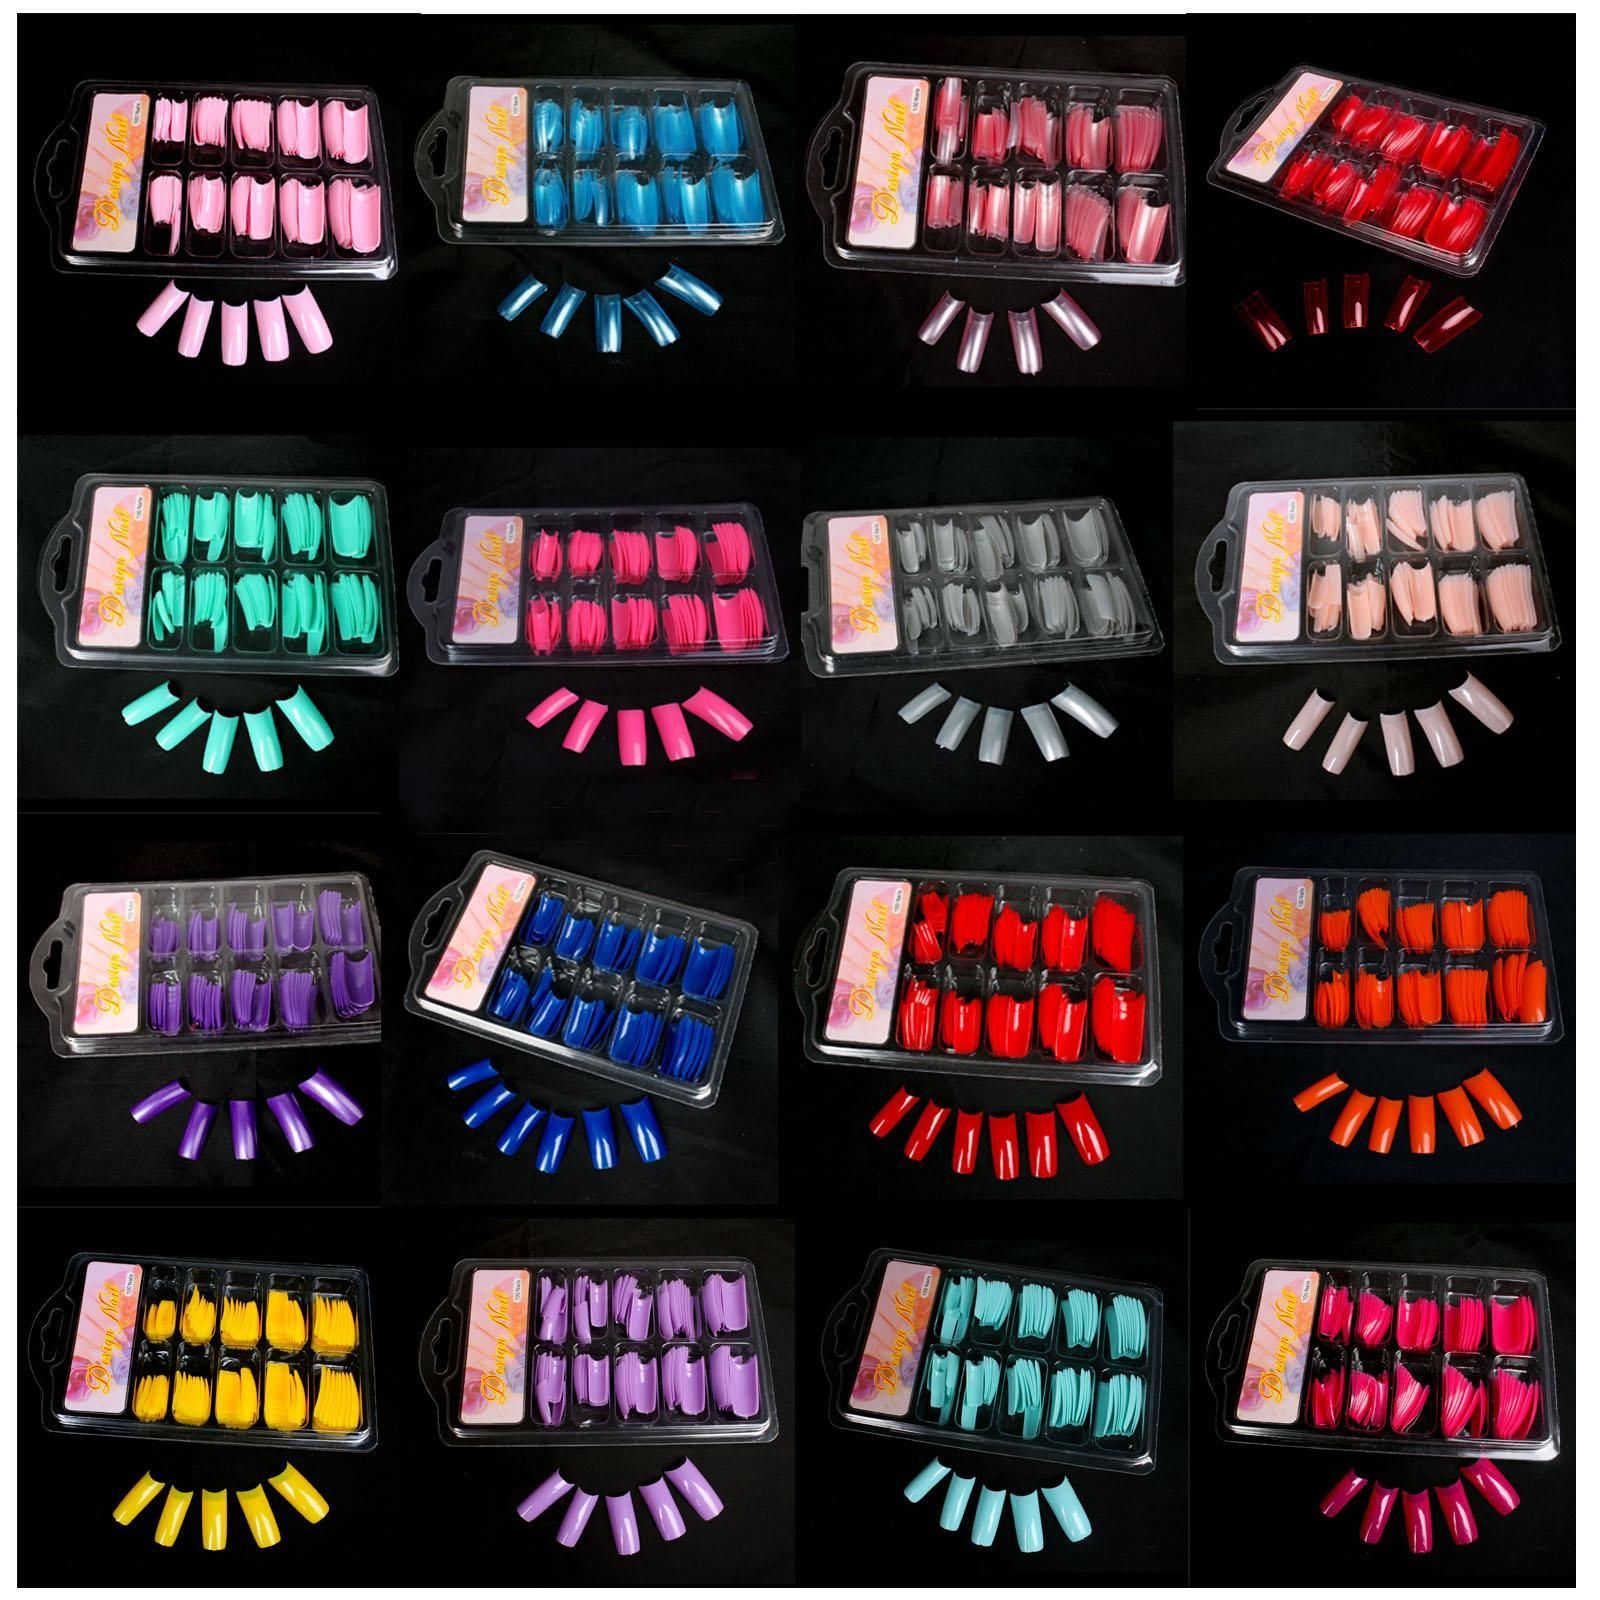 62 Best Nail Organization ideas  nail polish storage, nail organization,  nail polish organizer